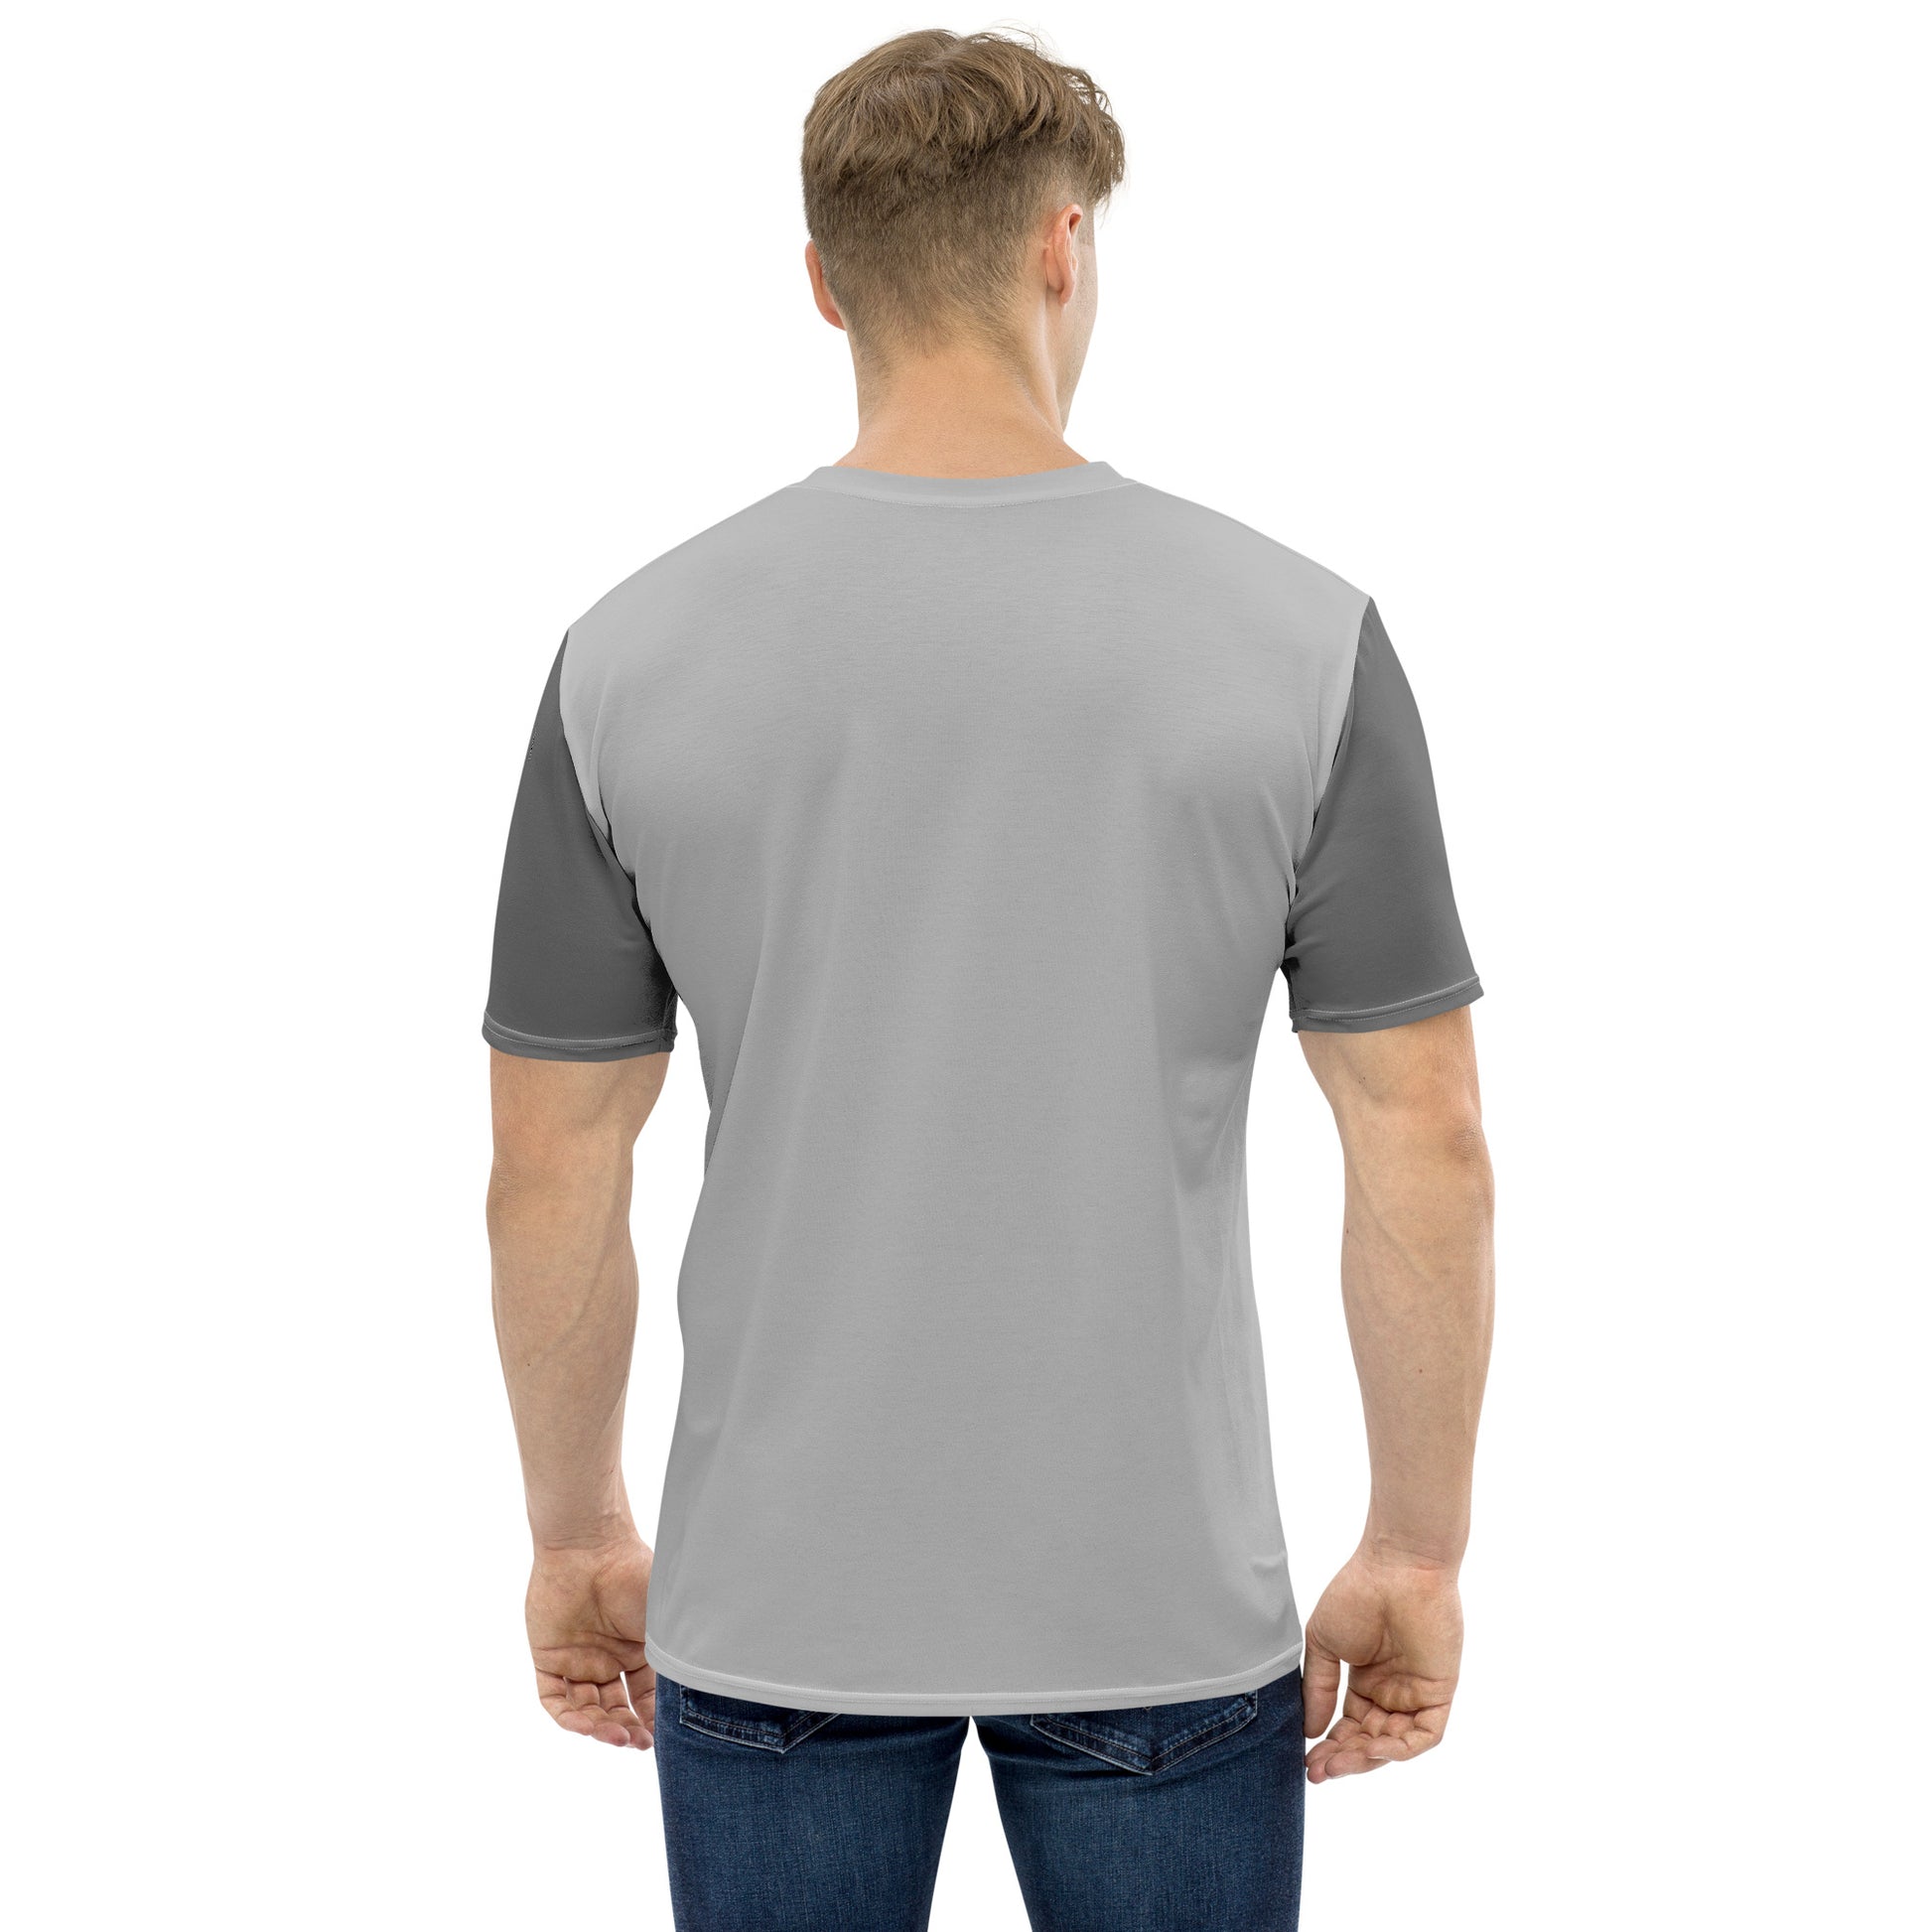 TIME OF VIBES - Premium Men's T-Shirt USA (Grey/Grey) - €49.00